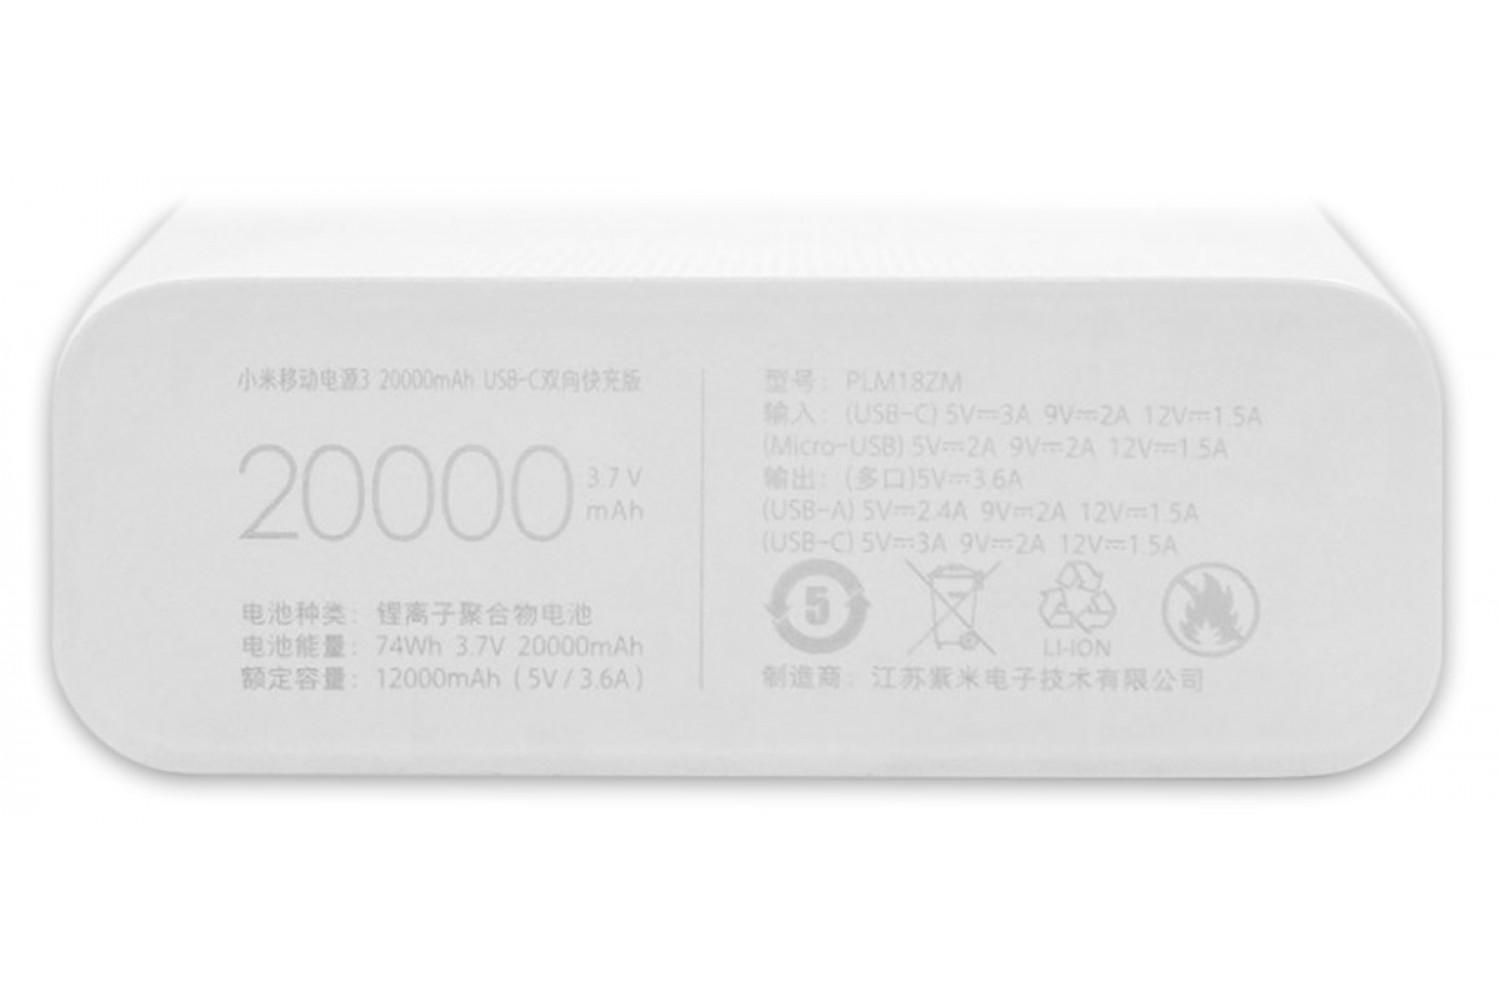 Сколько 3 20000. Внешний аккумулятор Xiaomi Power Bank 3 2usb plm18zm 20000 Mah белый. Power Bank Xiaomi 3 20000mah plm18zm. Xiaomi Powerbank mi Power 3 Pro. Power Bank Xiaomi mi 3 20000 Mah plm18zm портативный аккумулятор.